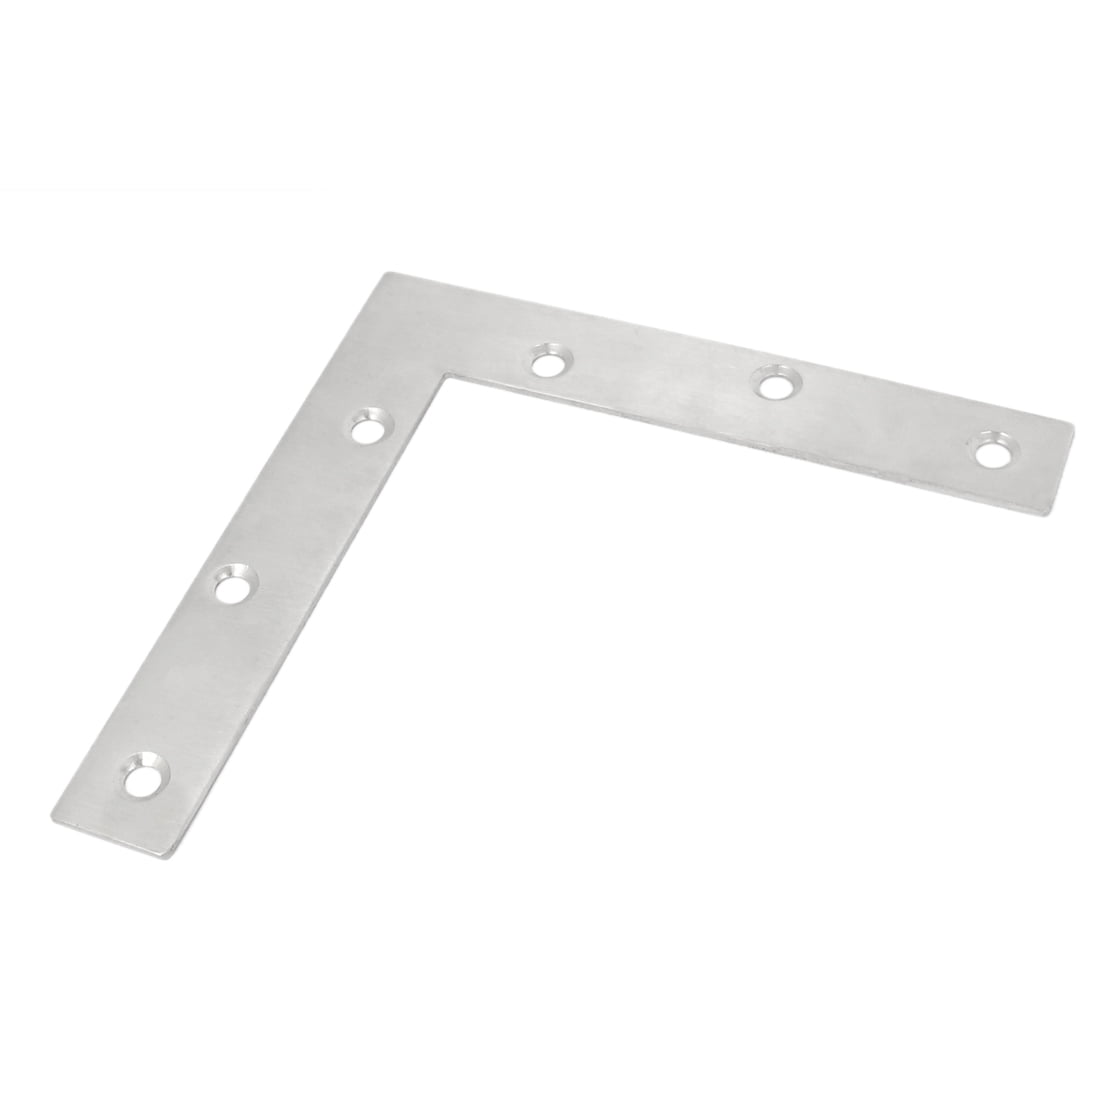 100x100x20mm 90 Degree Small/Large Steel Right Angle Metal L Shaped Bracket Corner Brace Fixing Shelf Support Repair x8